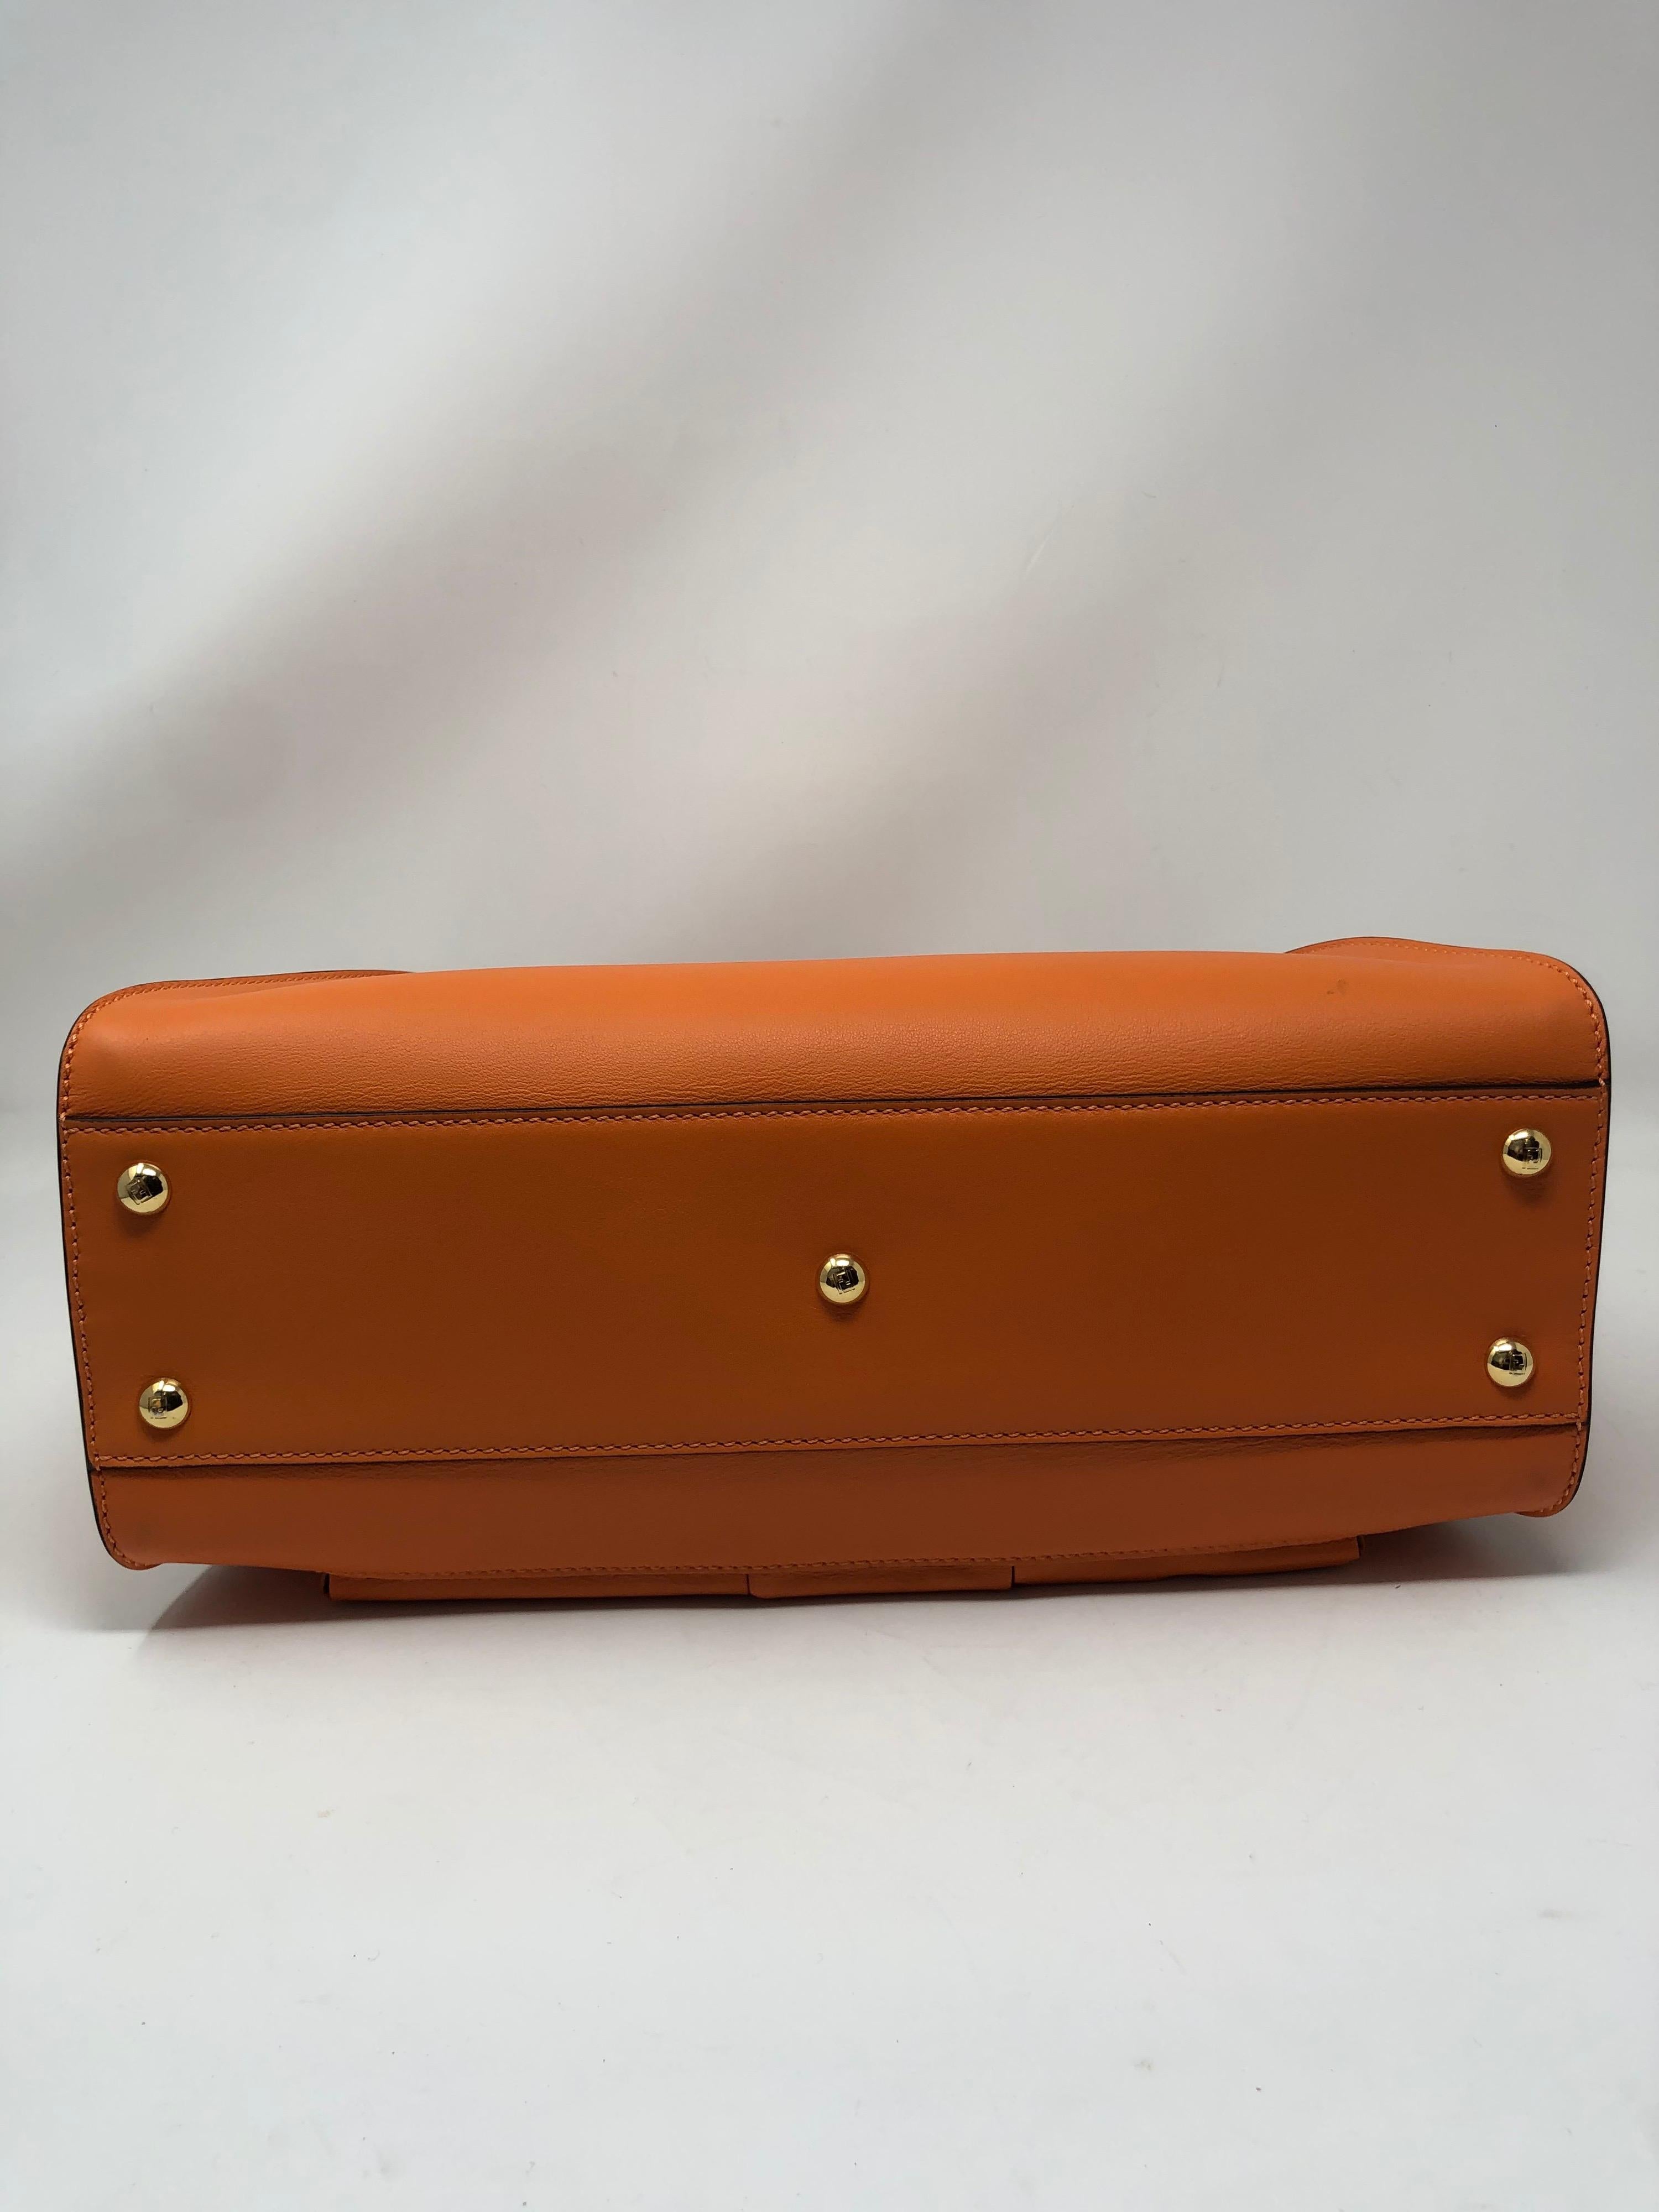 Fendi Peekaboo Orange Leather Bag  5